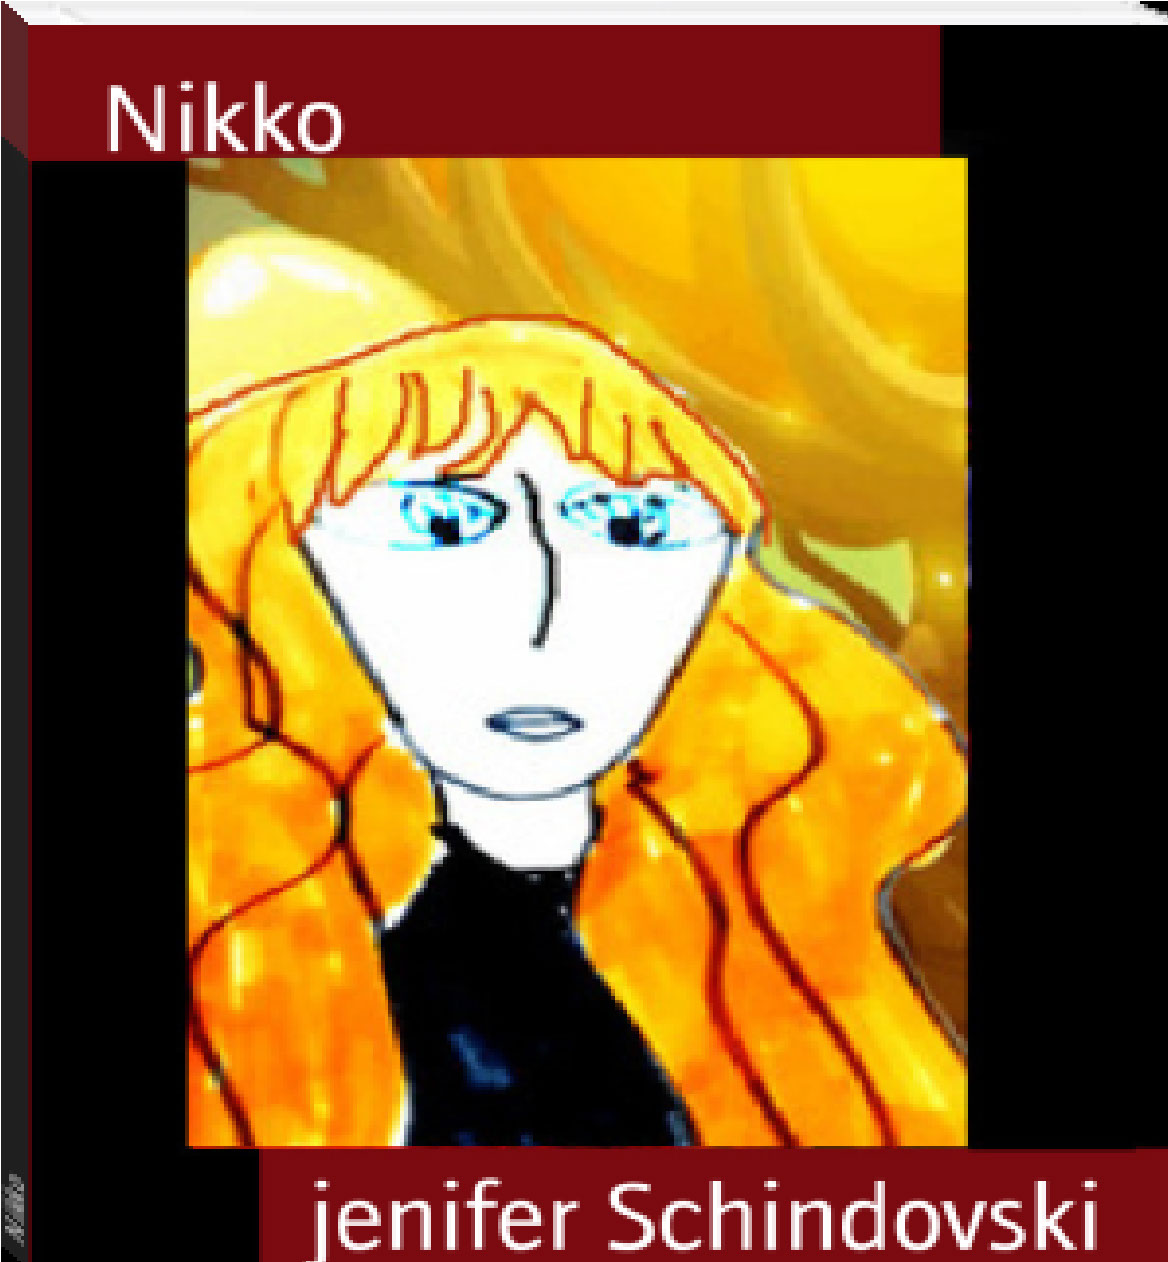 Nikko rendition image